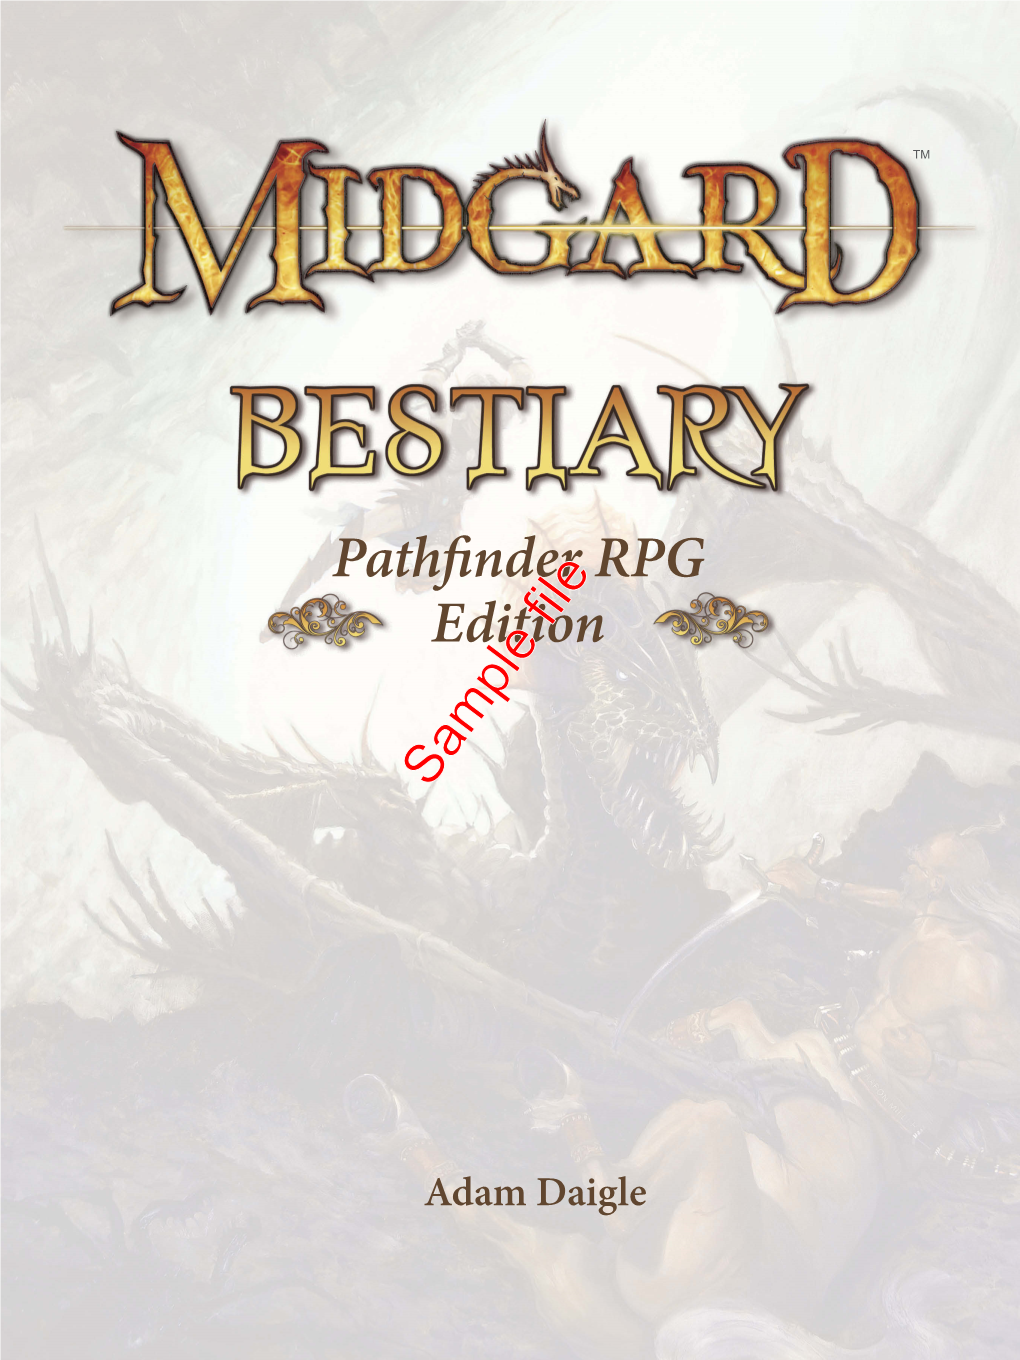 Pathfinder RPG Edition